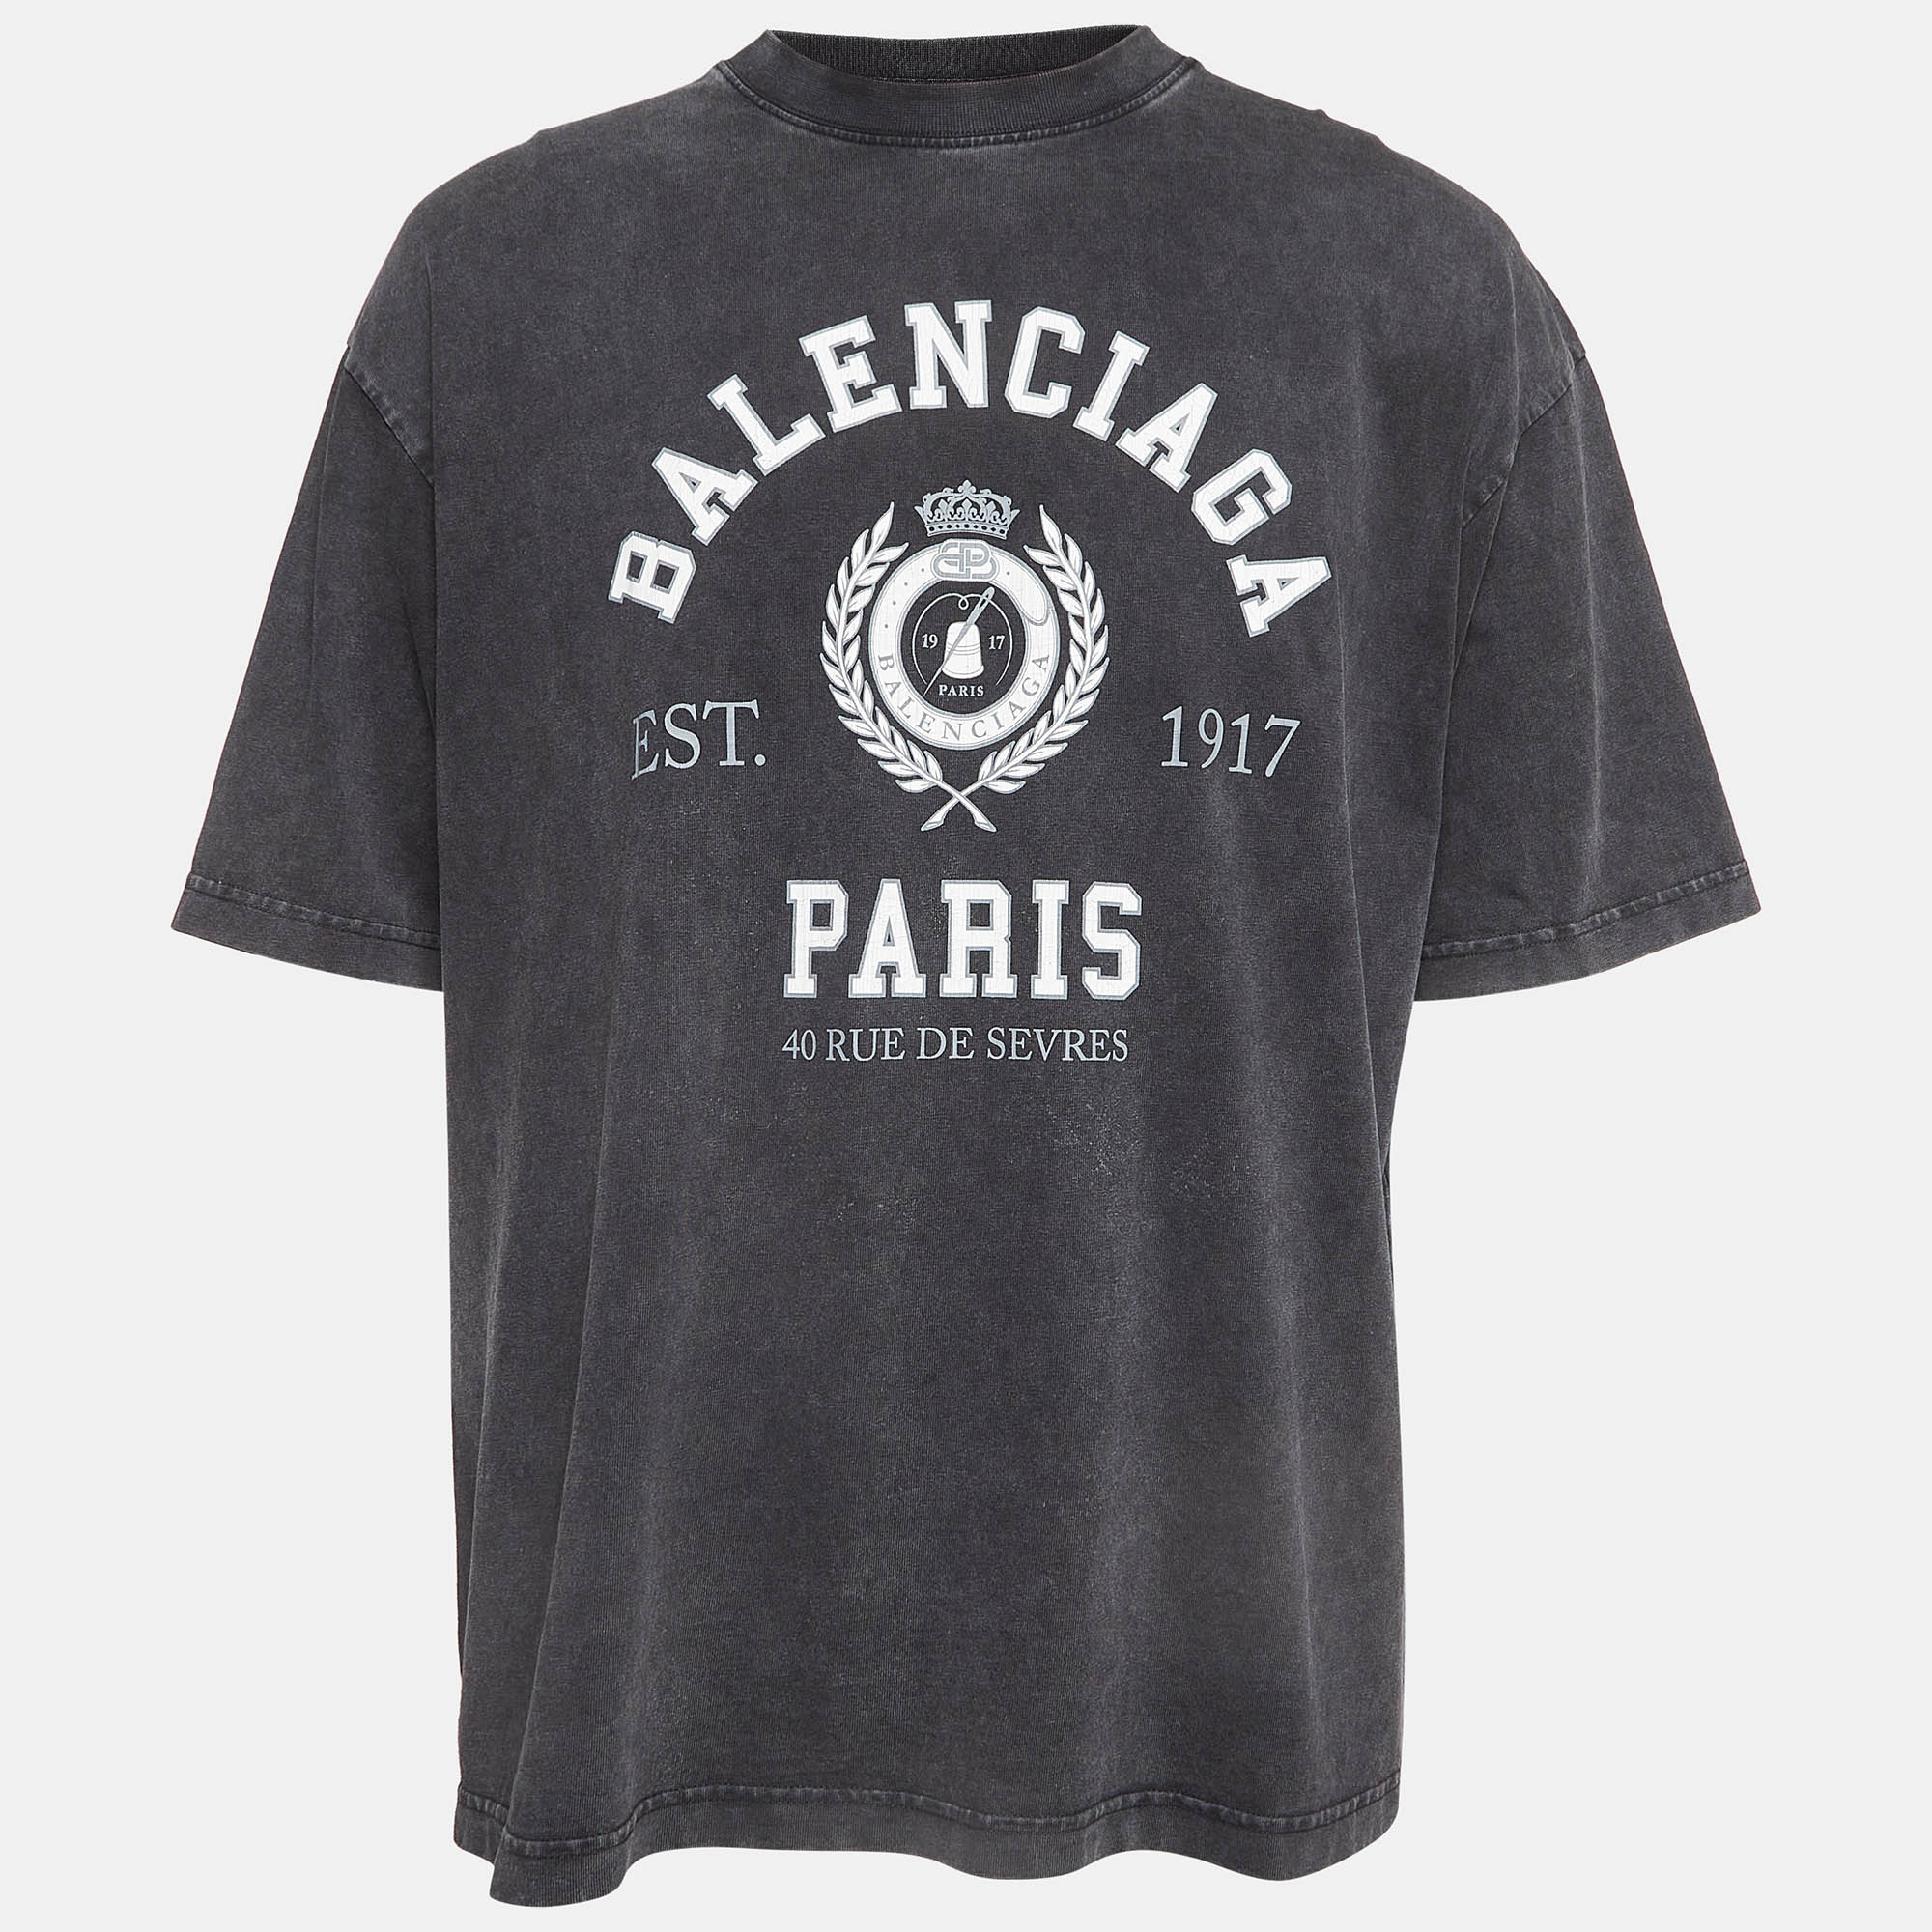 Balenciaga Grey Vintage Washed Logo Print Cotton Knit Tshirt L